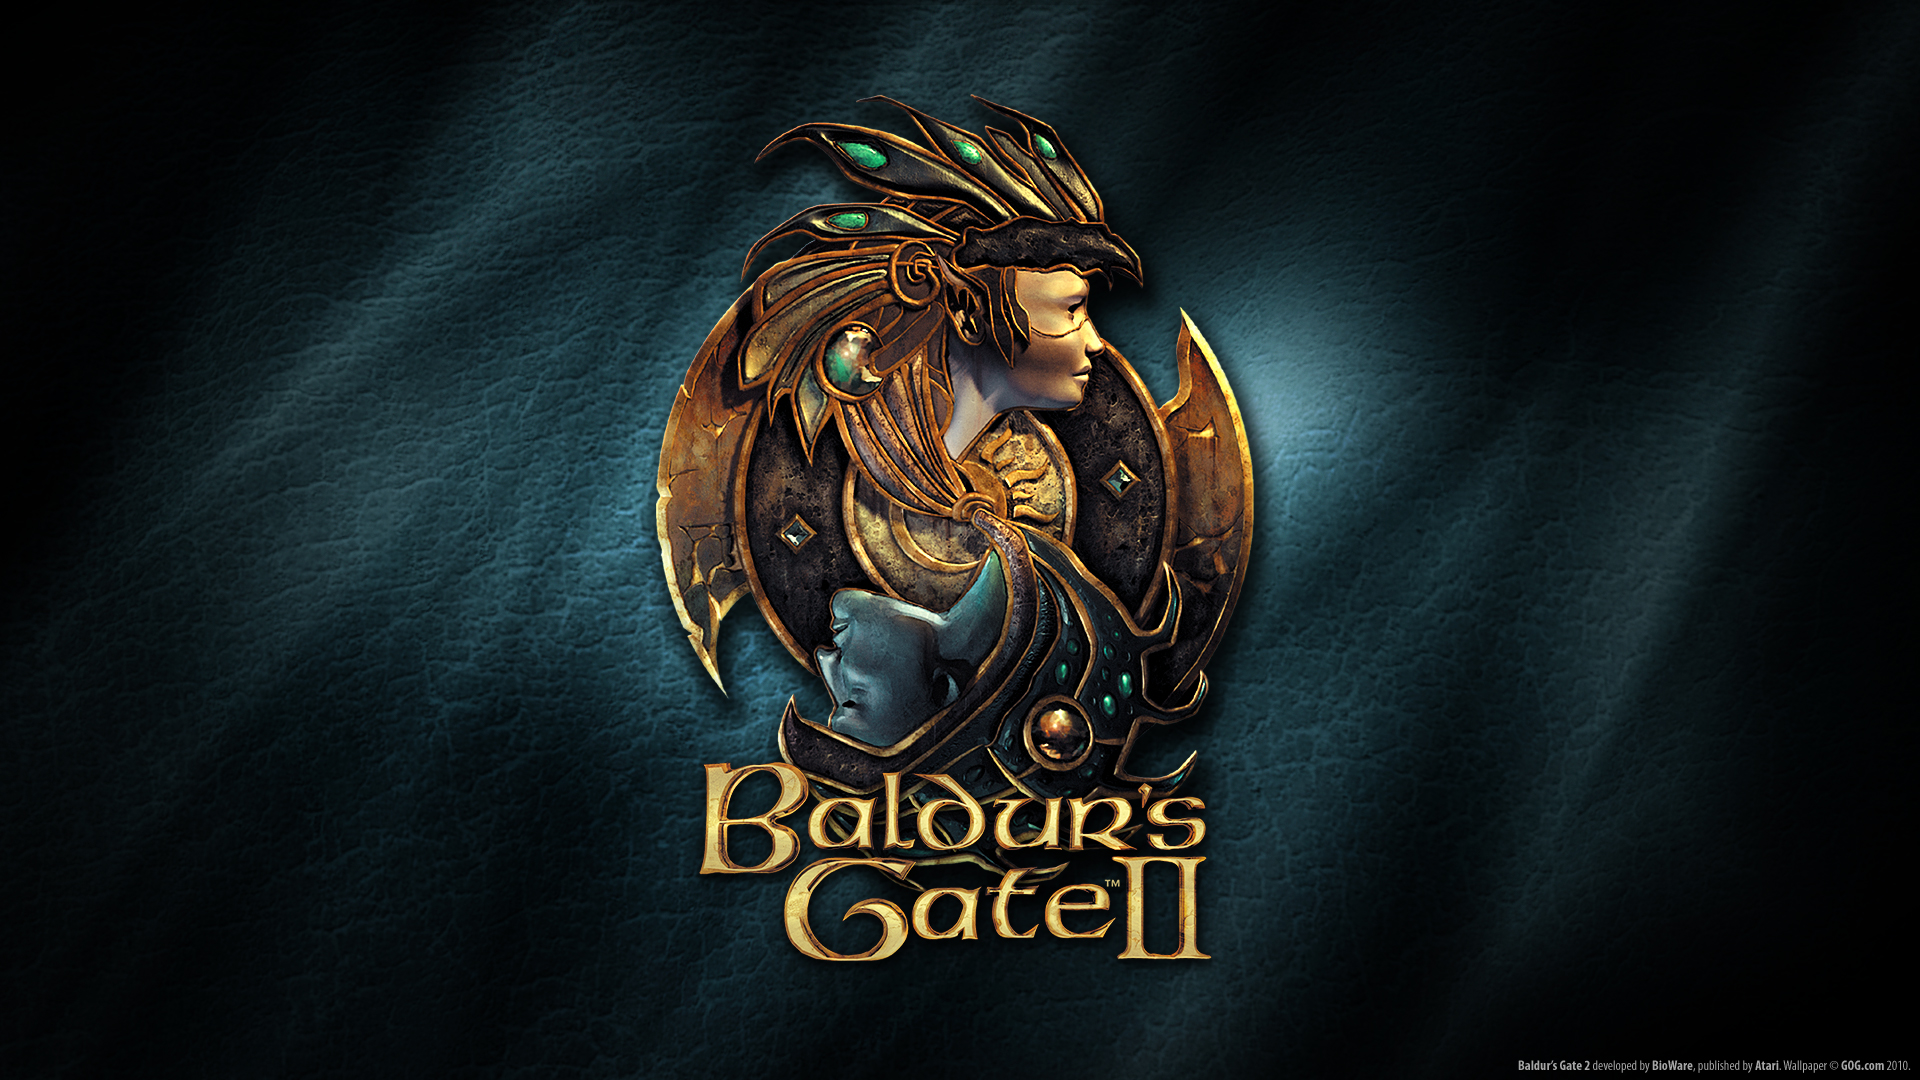 Baldur's Gate II Wallpapers